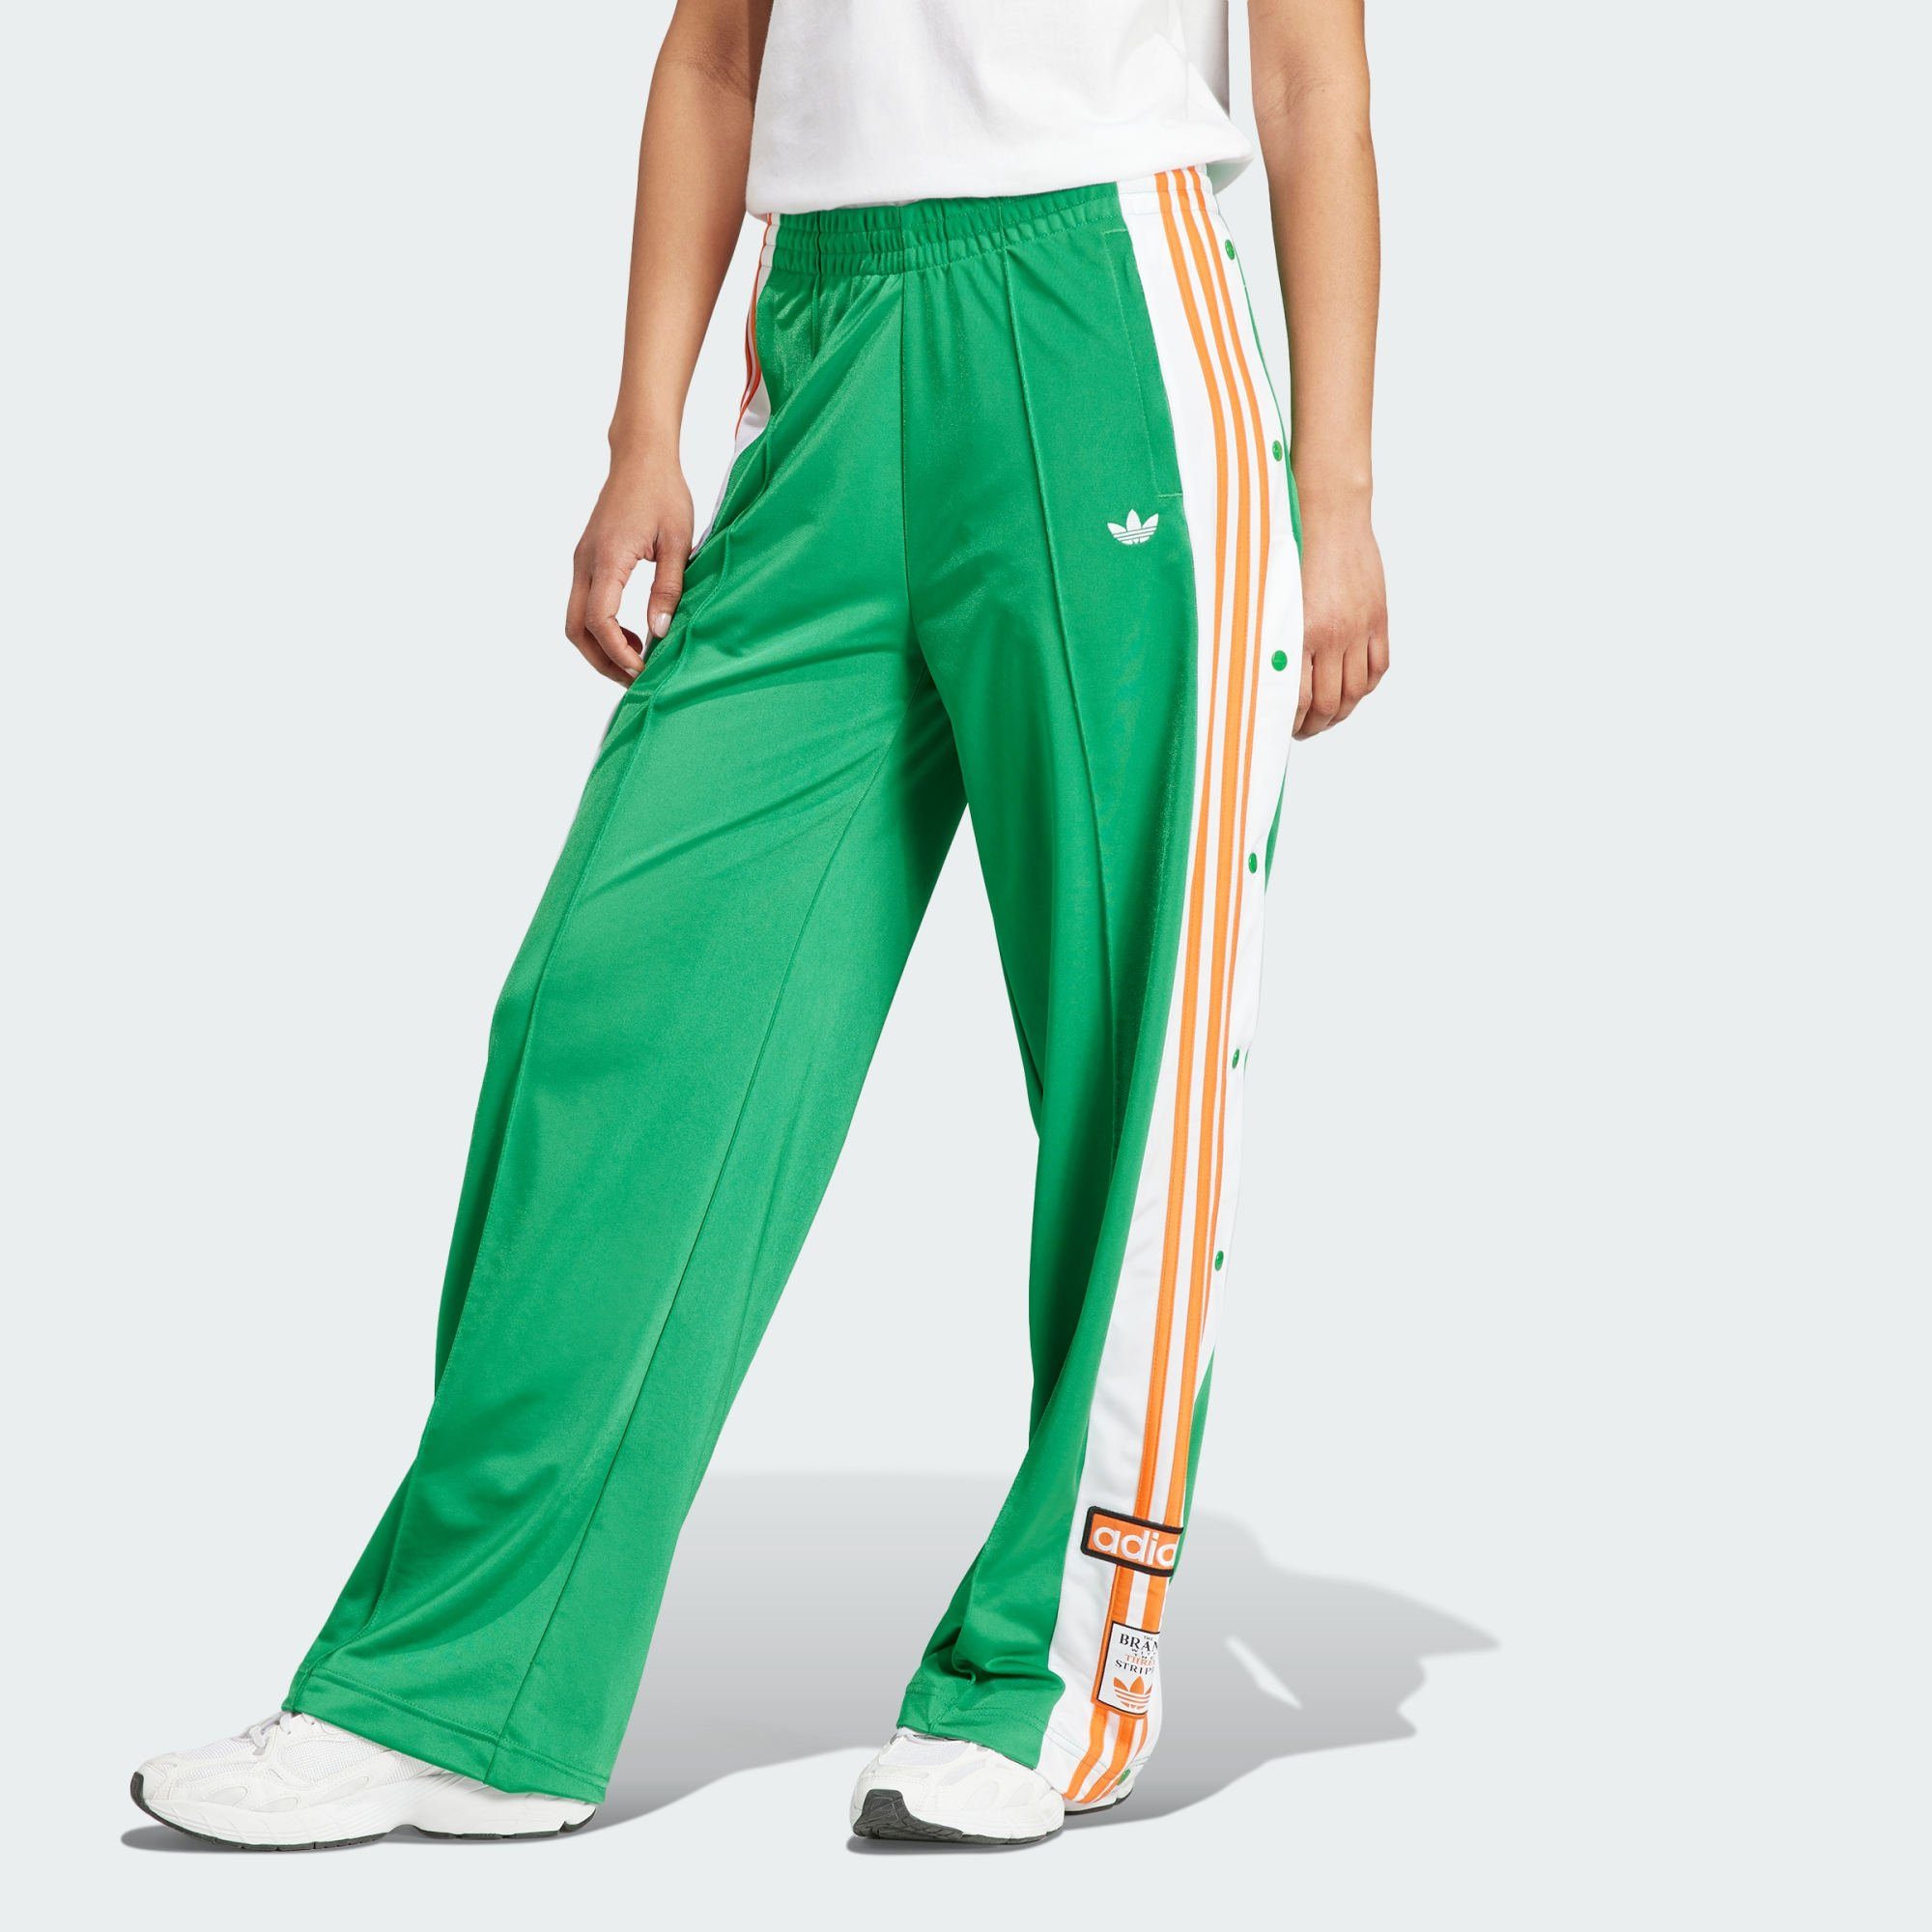 ADIBREAK Jogginghose adidas HOSE Green Originals